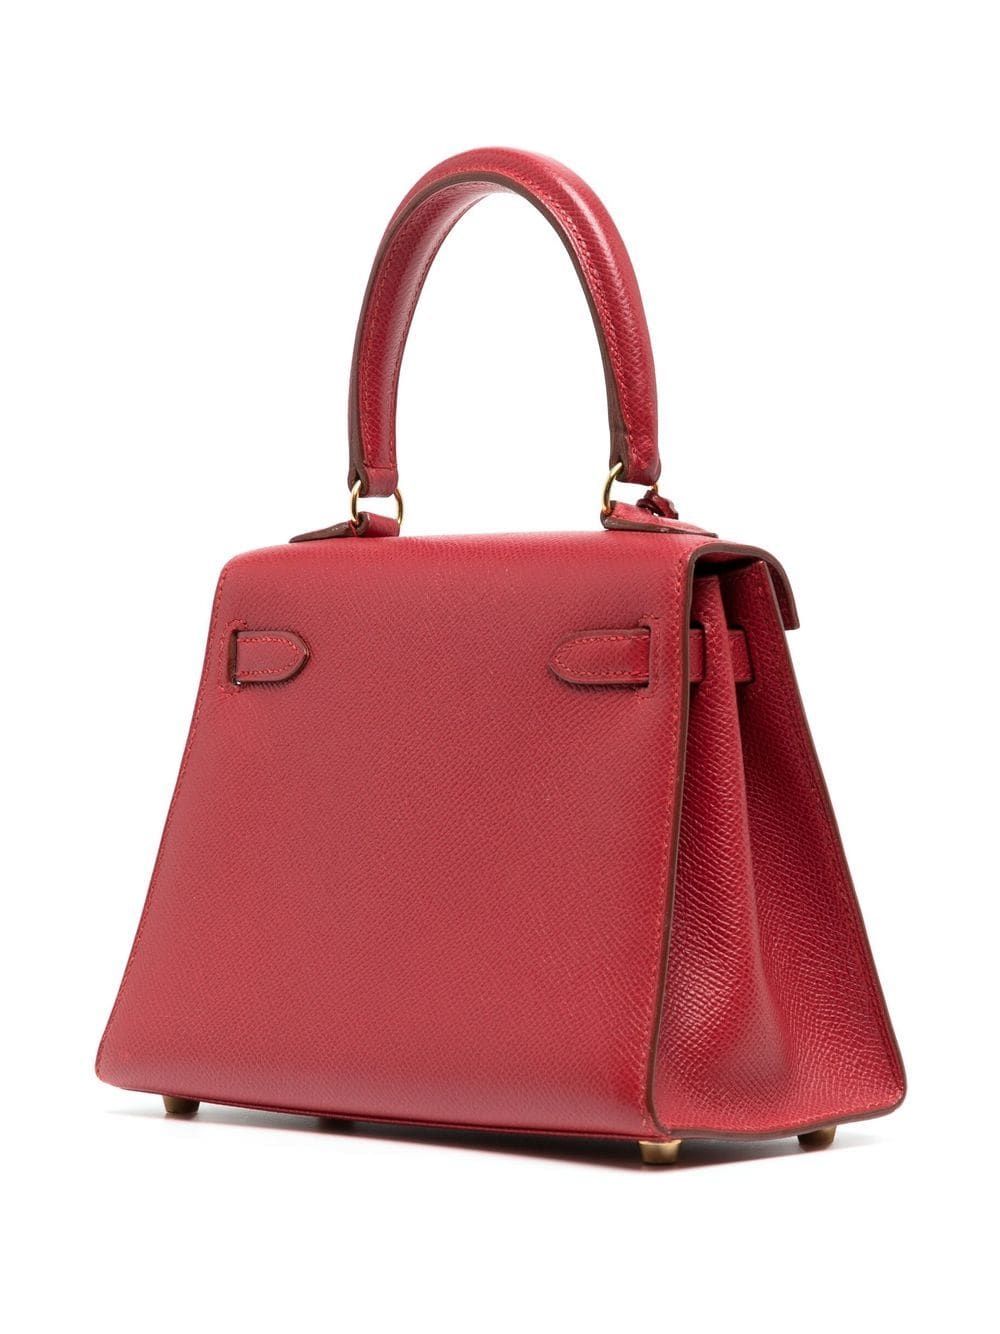 2011 pre-owned Kelly 20 two-way handbag | Farfetch Global